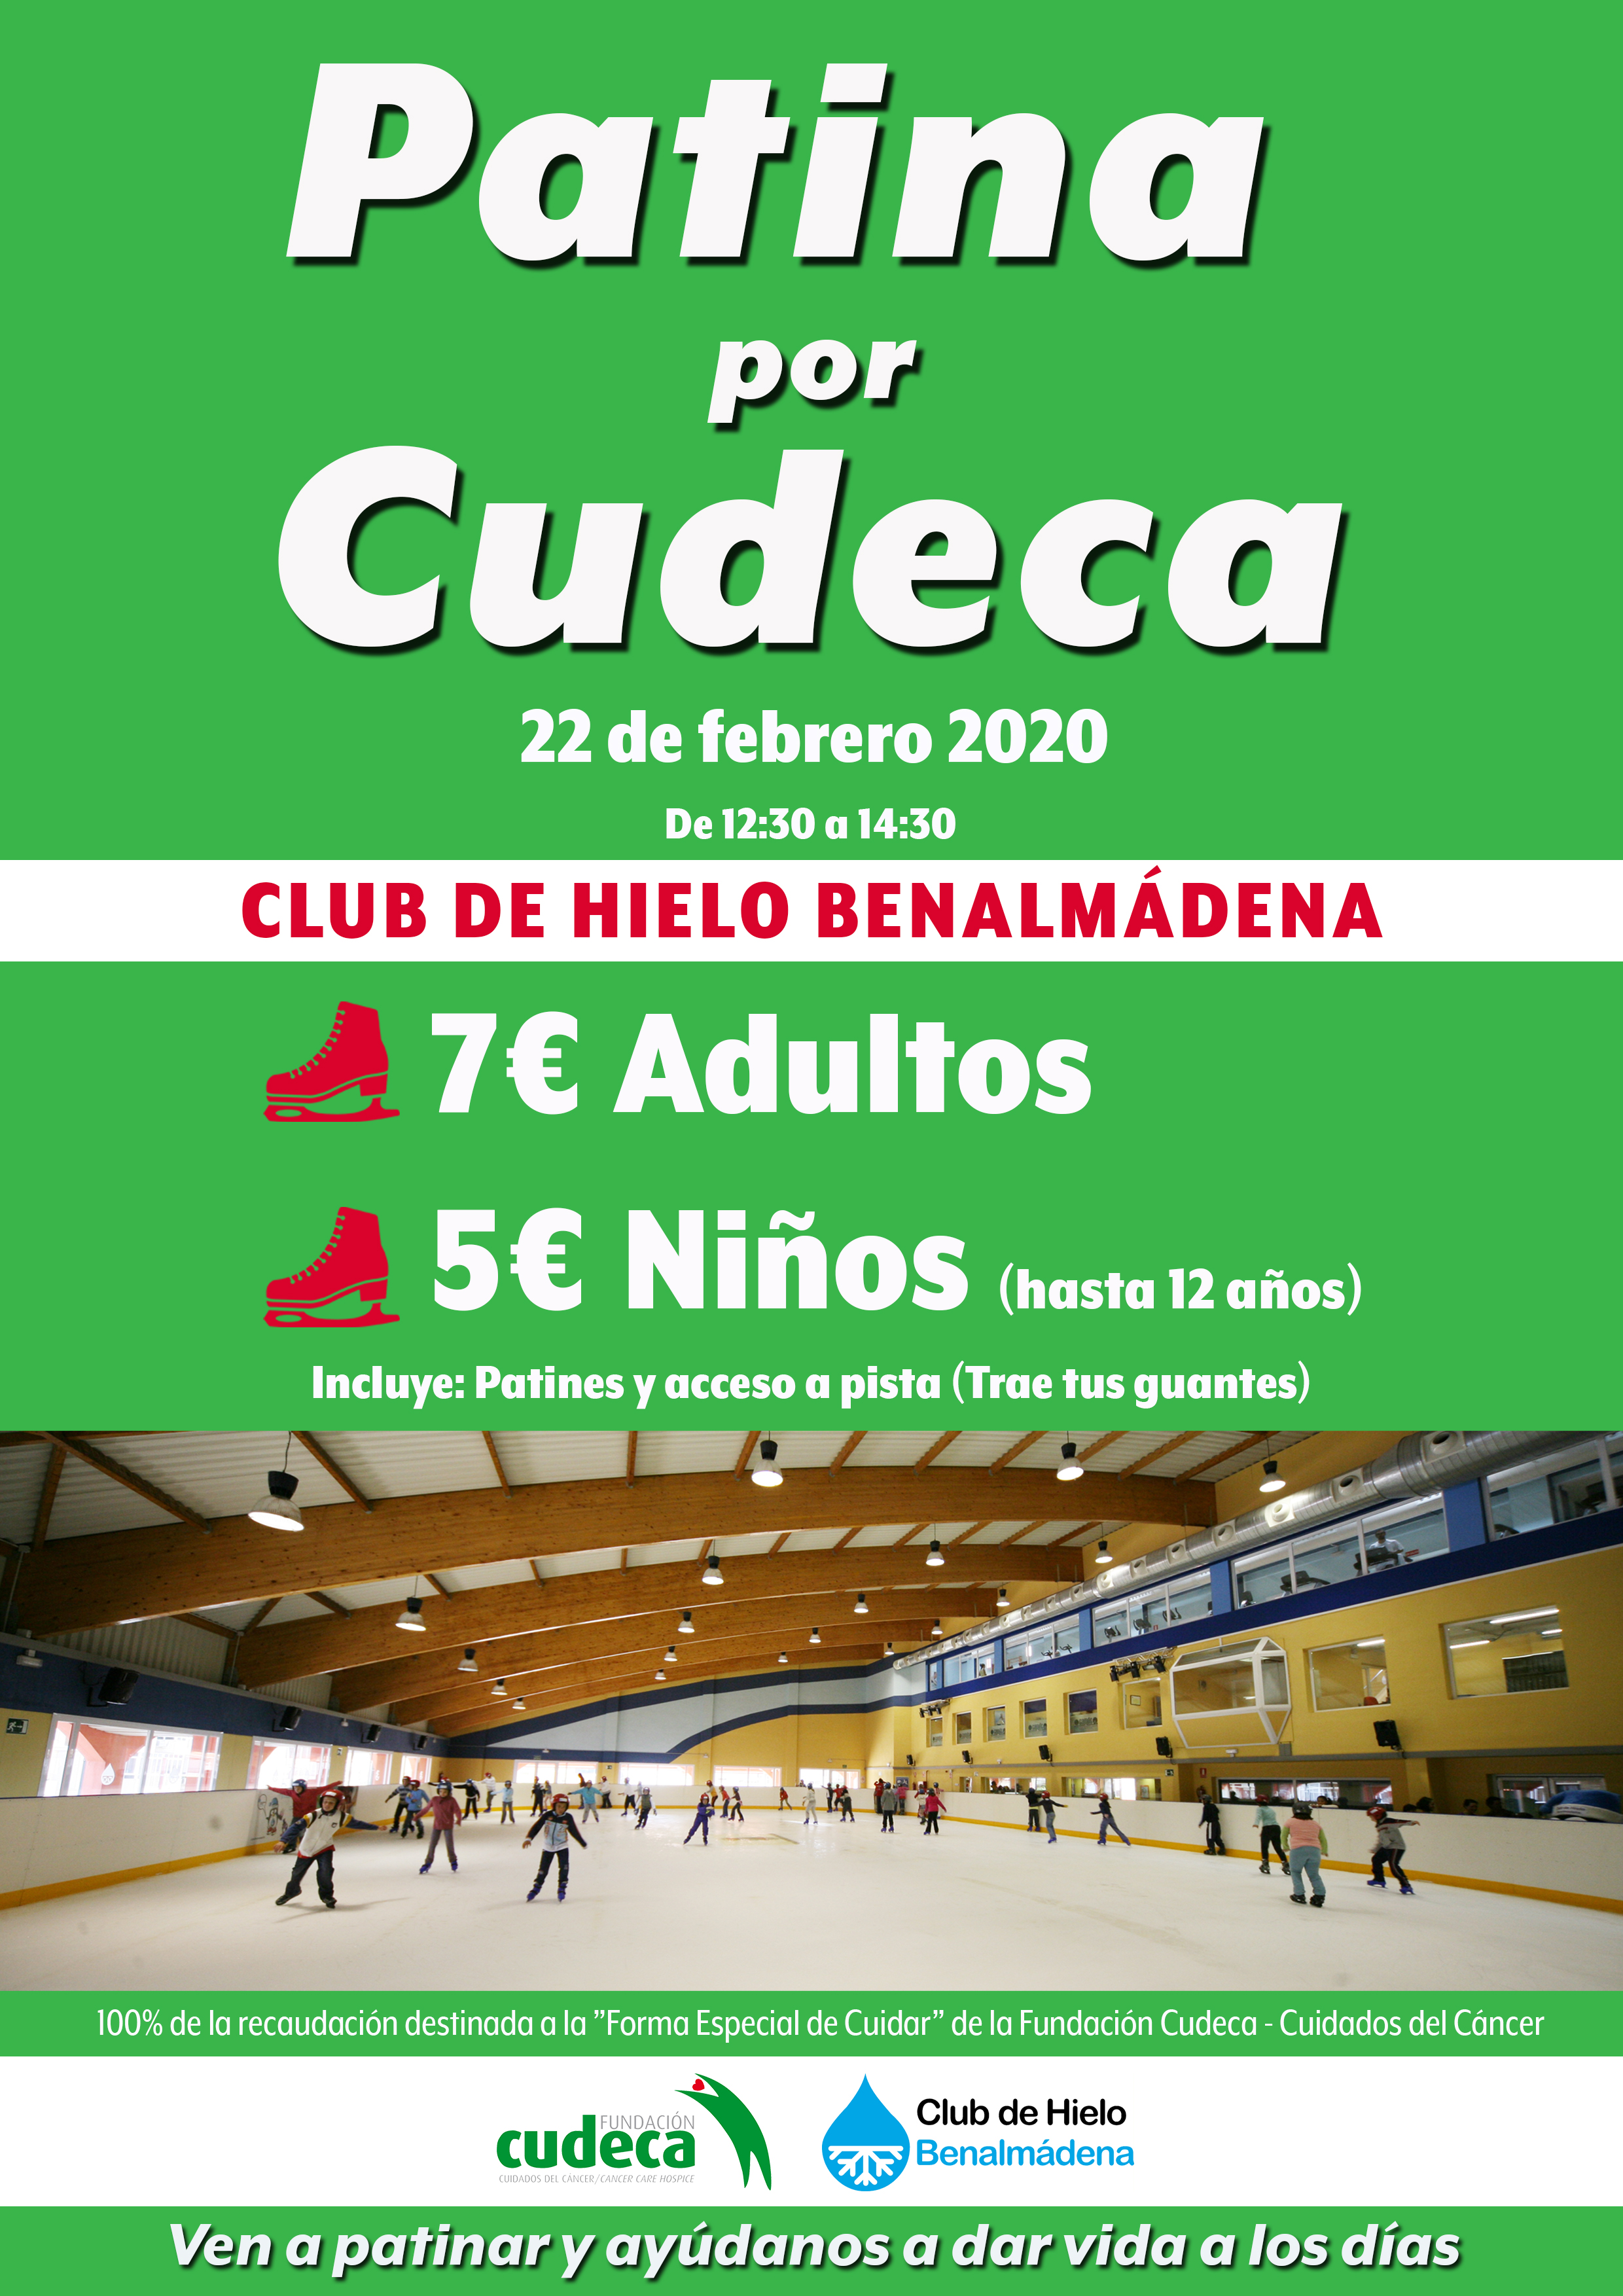 Skating for Cudeca 2020